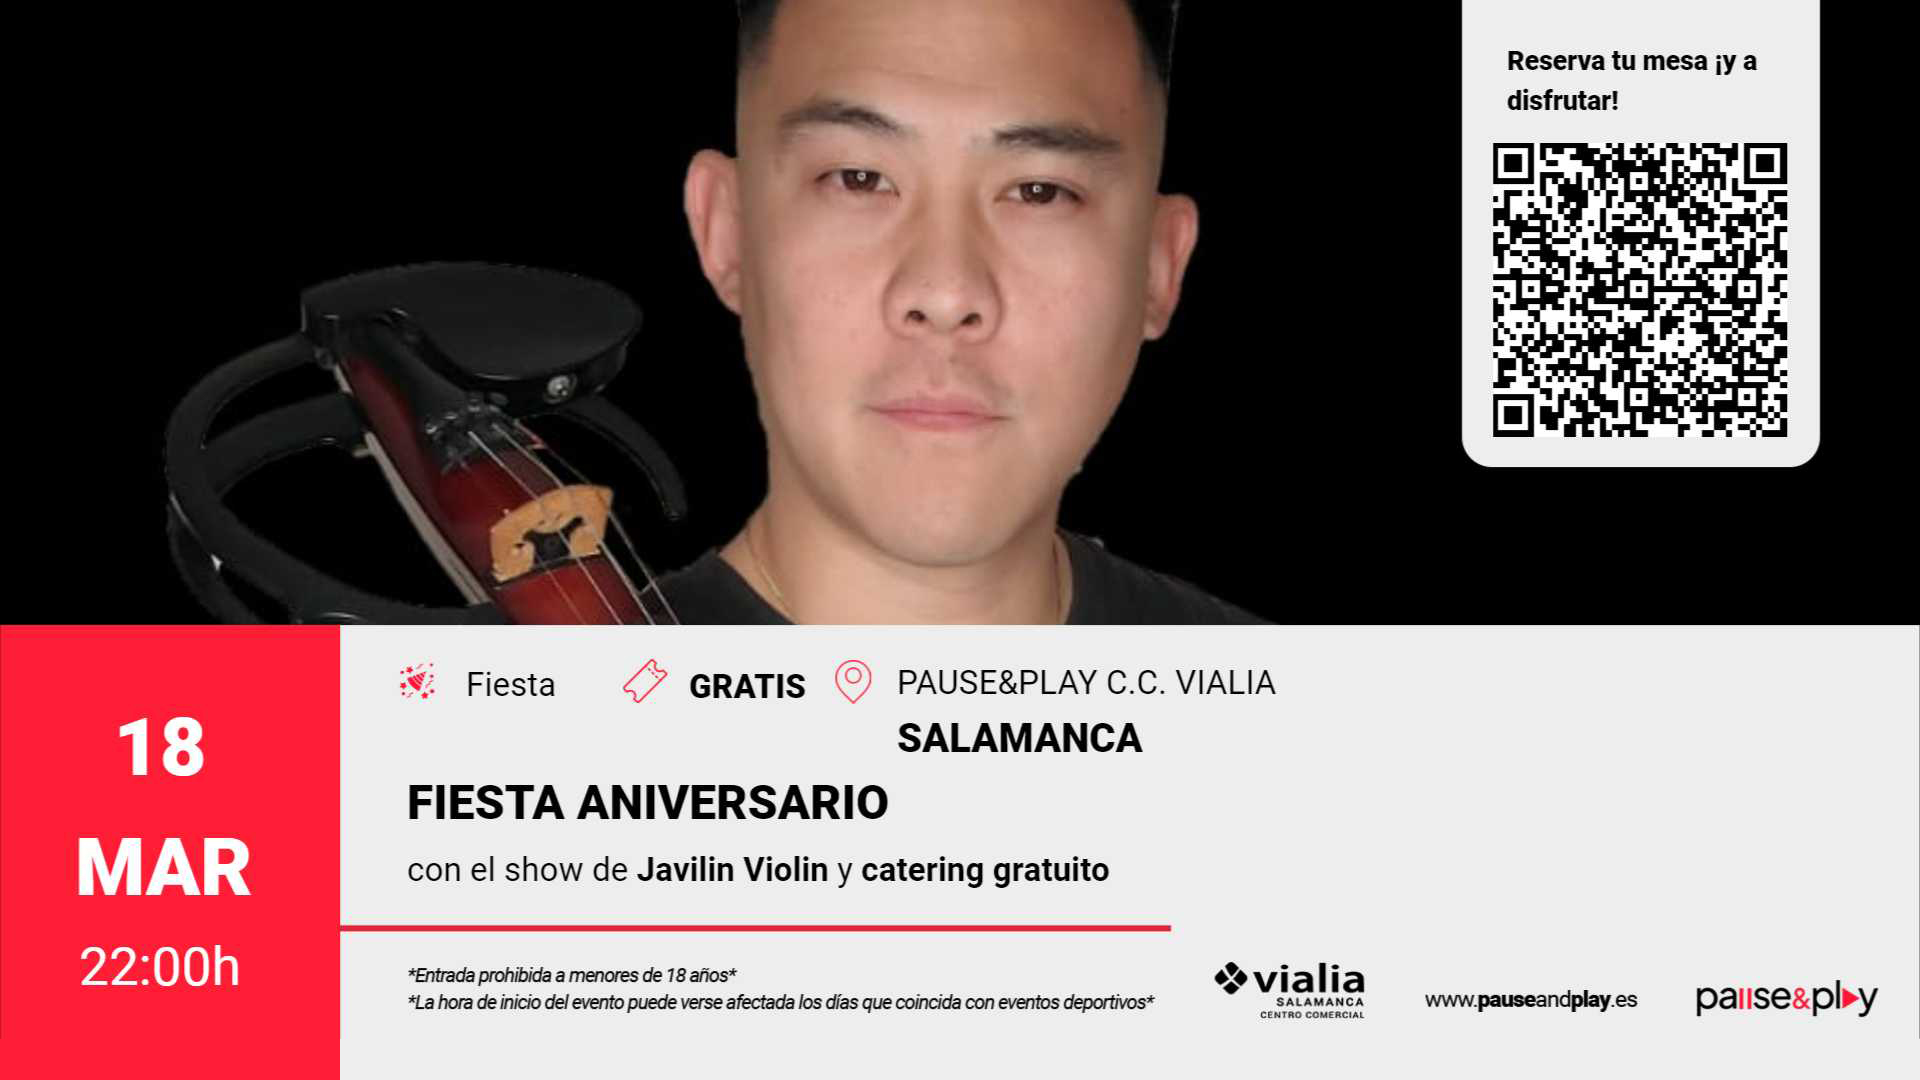 Fiestas Aniversario con Javilin Violin Pause&Play C.C. Vialia Salamanca